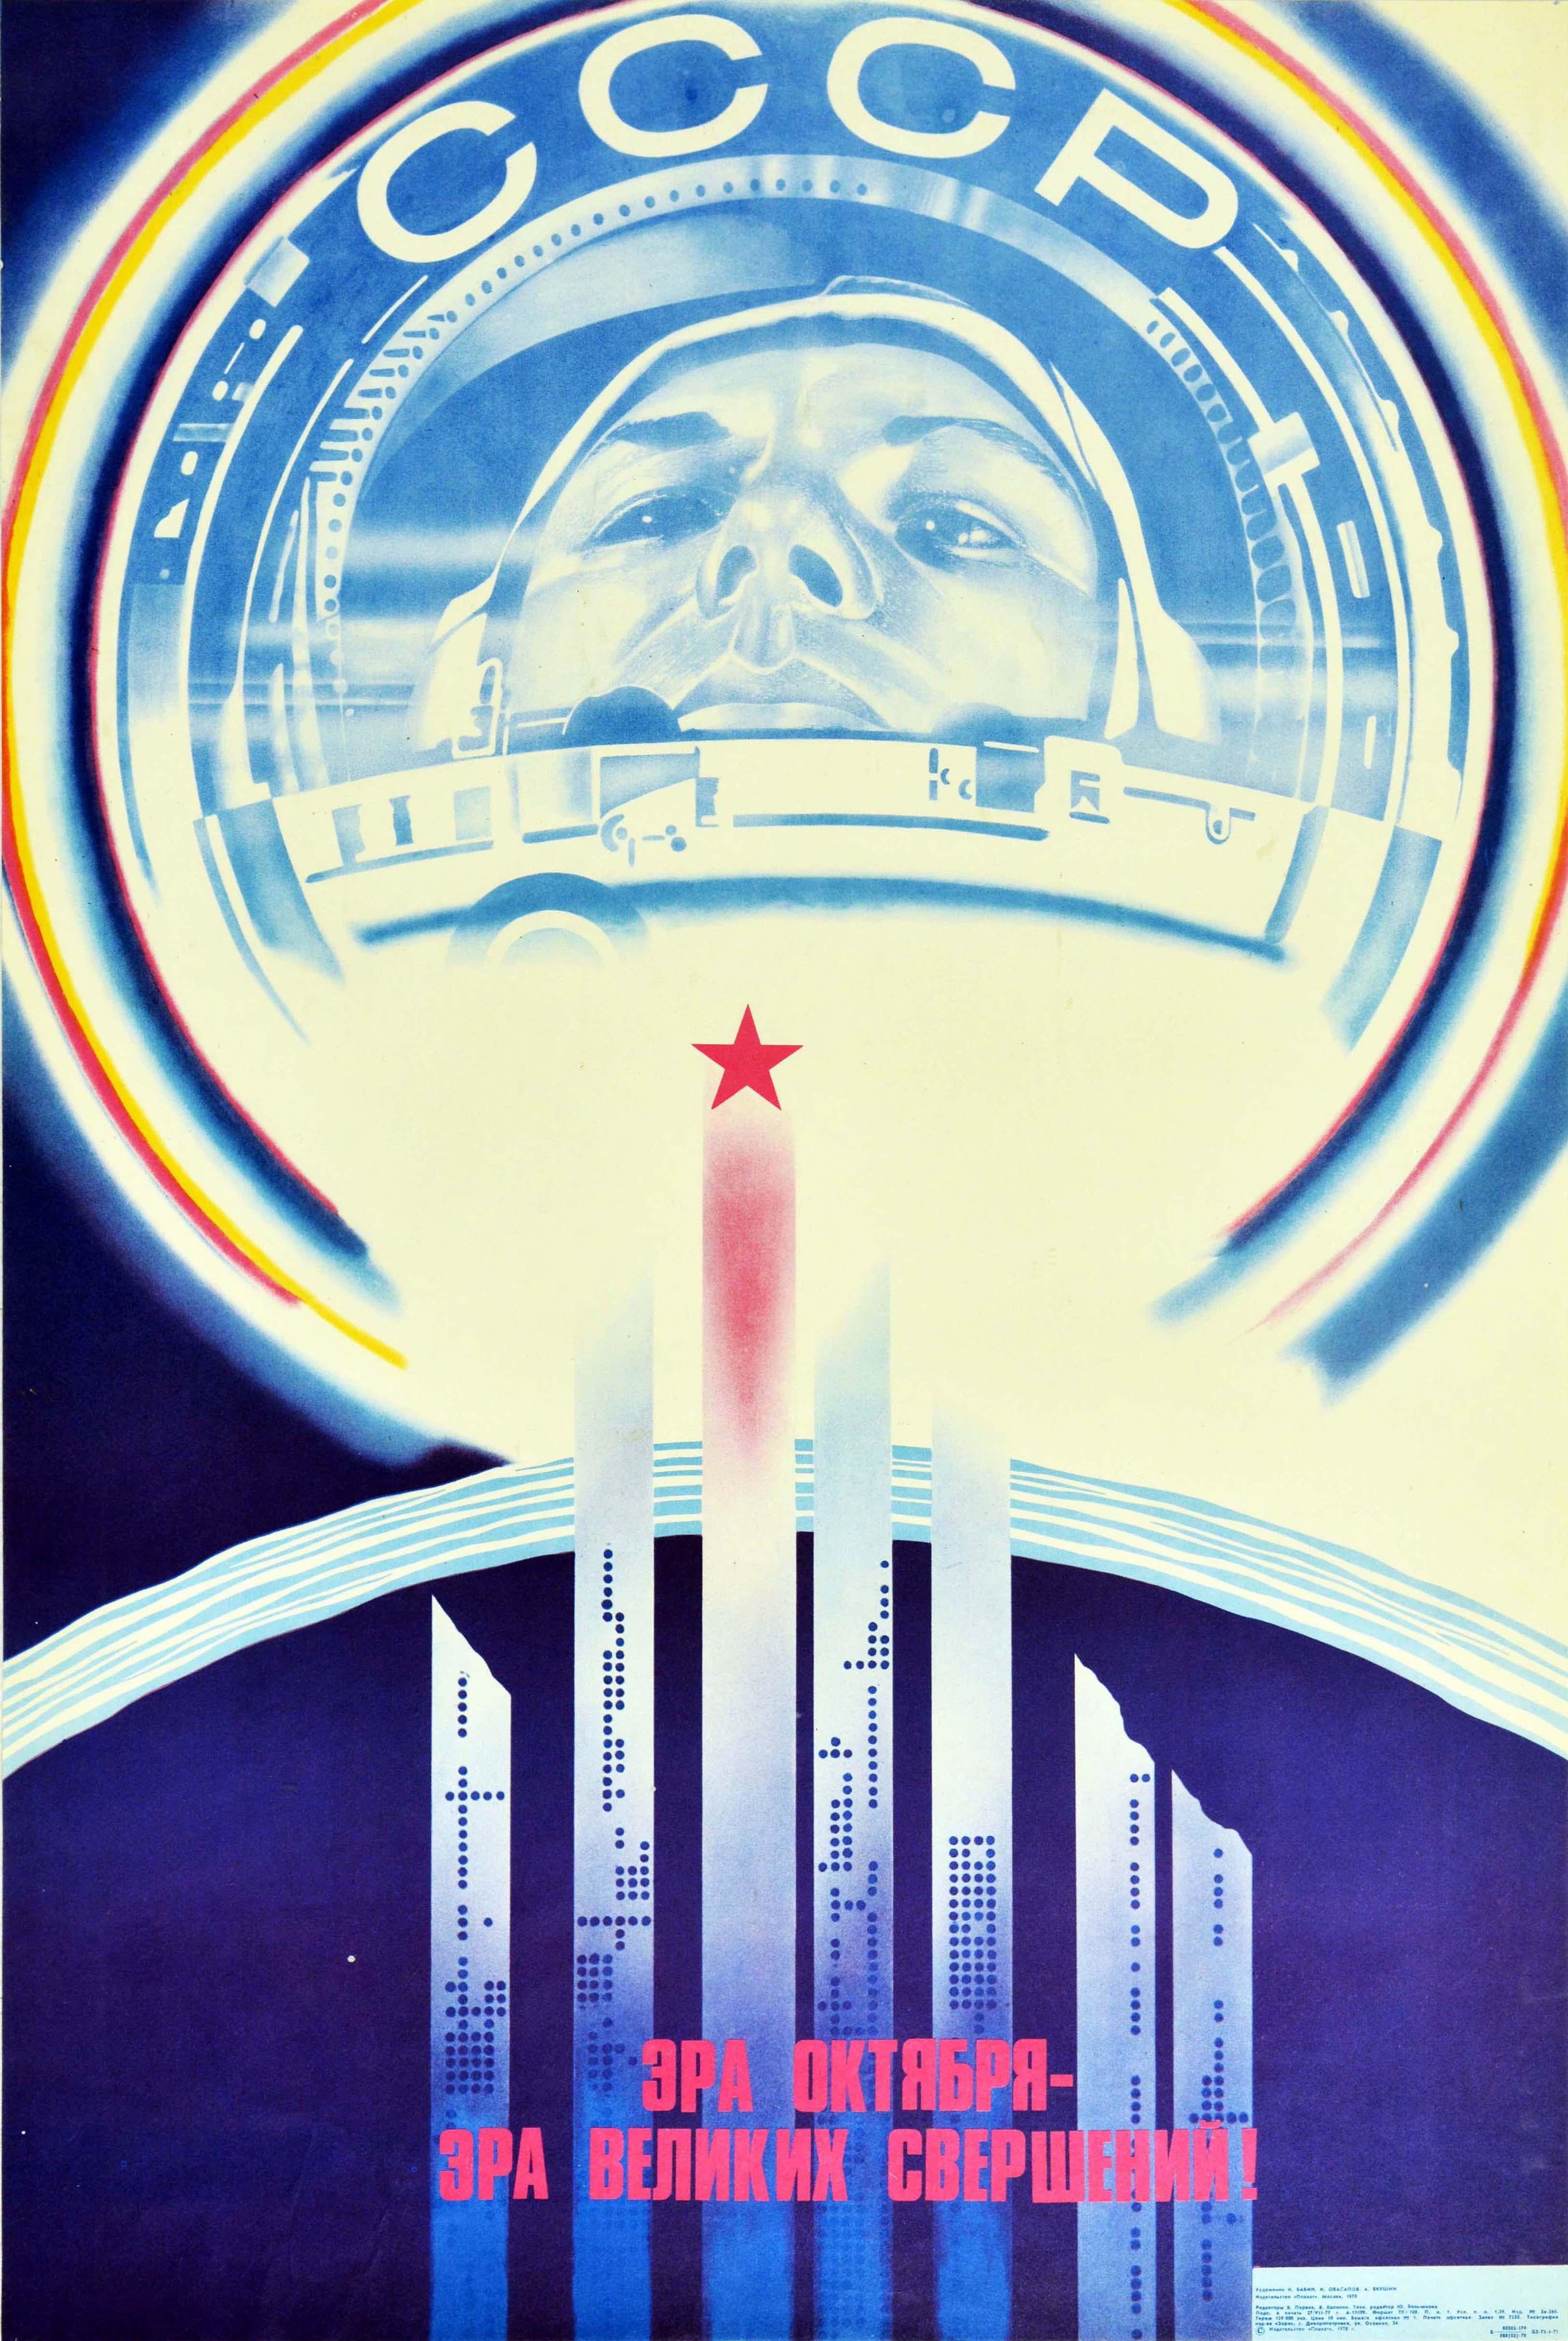 Babin Ovasapov Yakushin Print - Original Vintage Soviet Poster Great Achievements Era USSR Gagarin Science Space